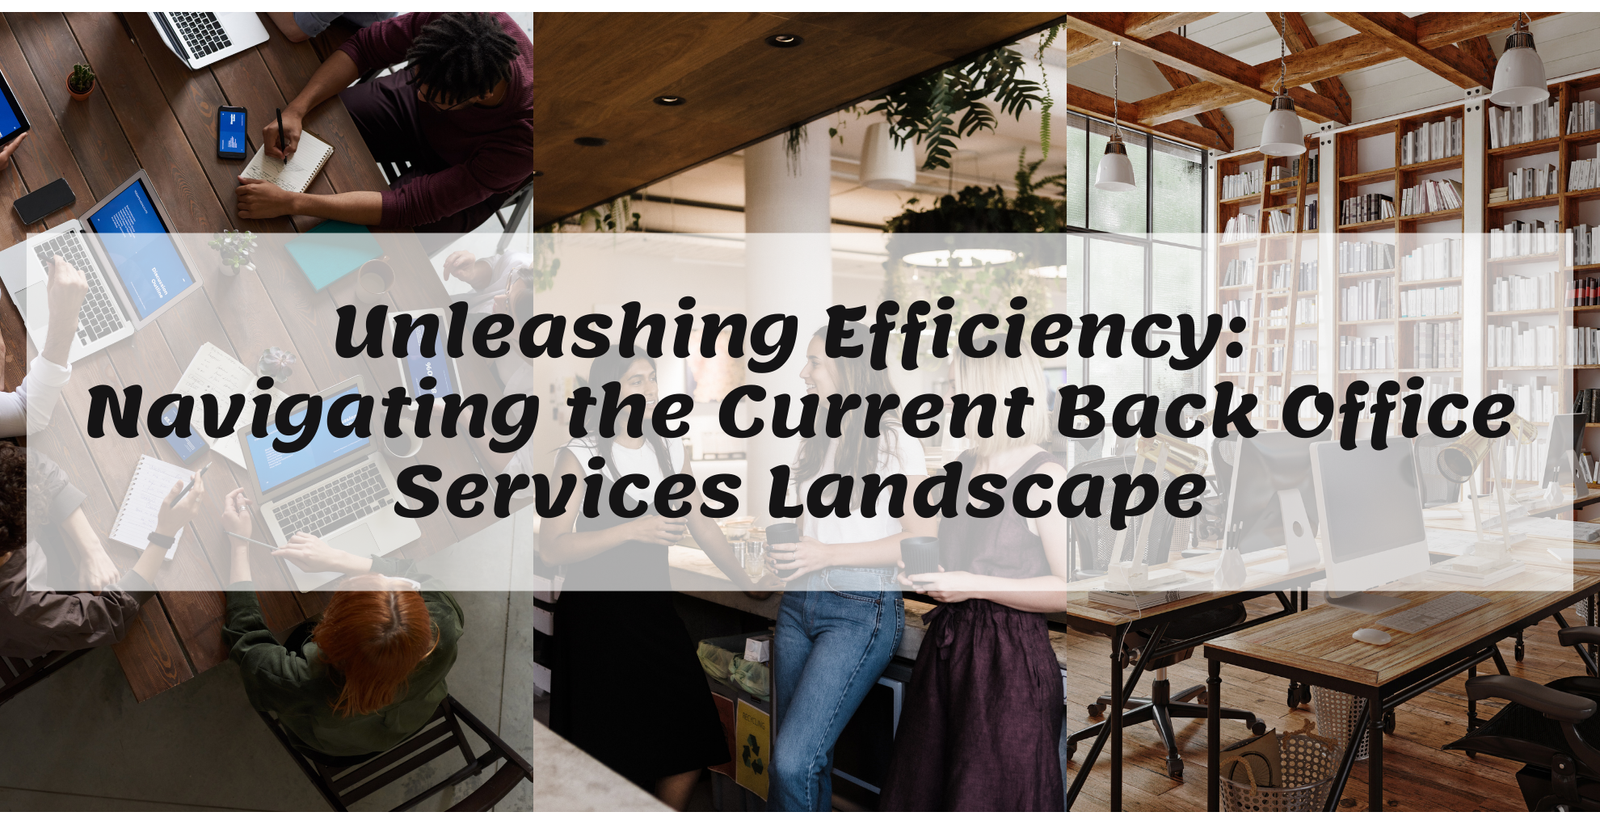 Unleashing Efficiency: Navigating the Current Back Office Services Landscape